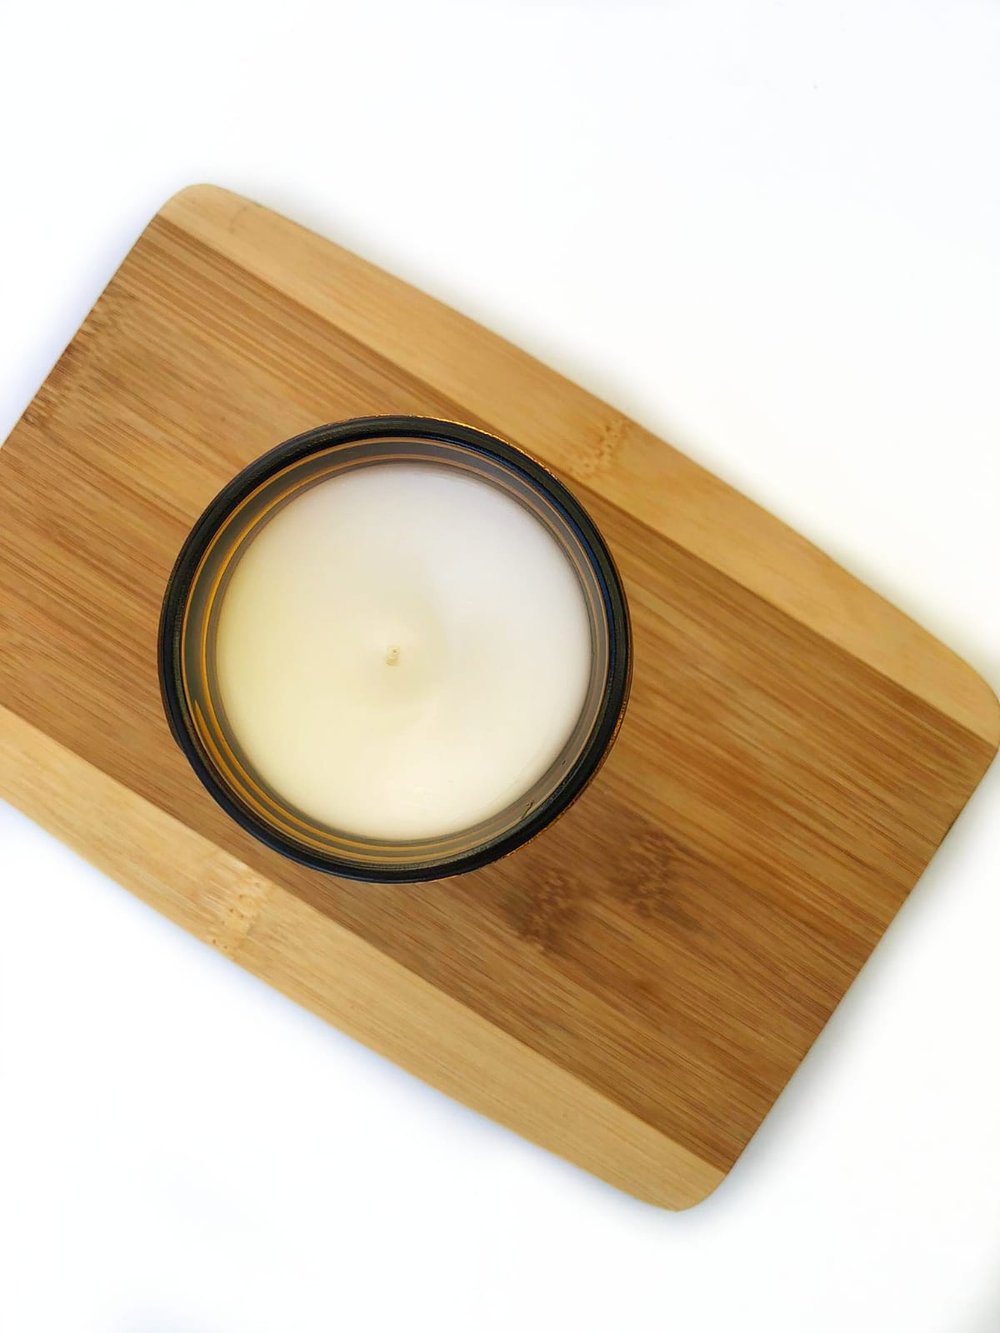 2.5 oz. Crisp Apples Wax Melt — Hidden Trail Candle Co.